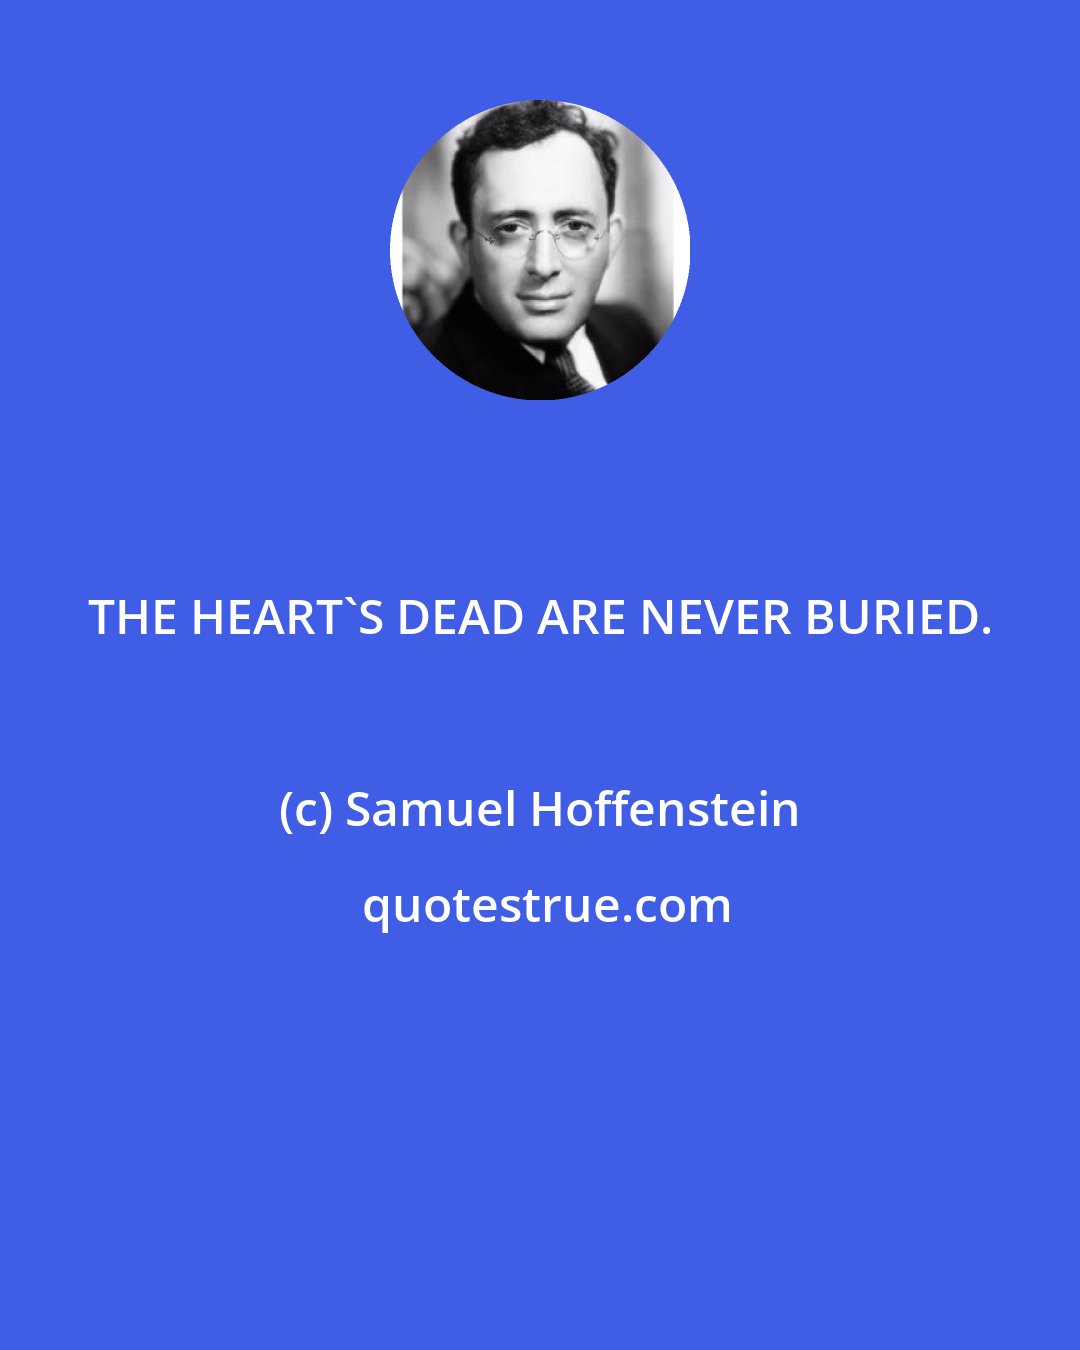 Samuel Hoffenstein: THE HEART'S DEAD ARE NEVER BURIED.